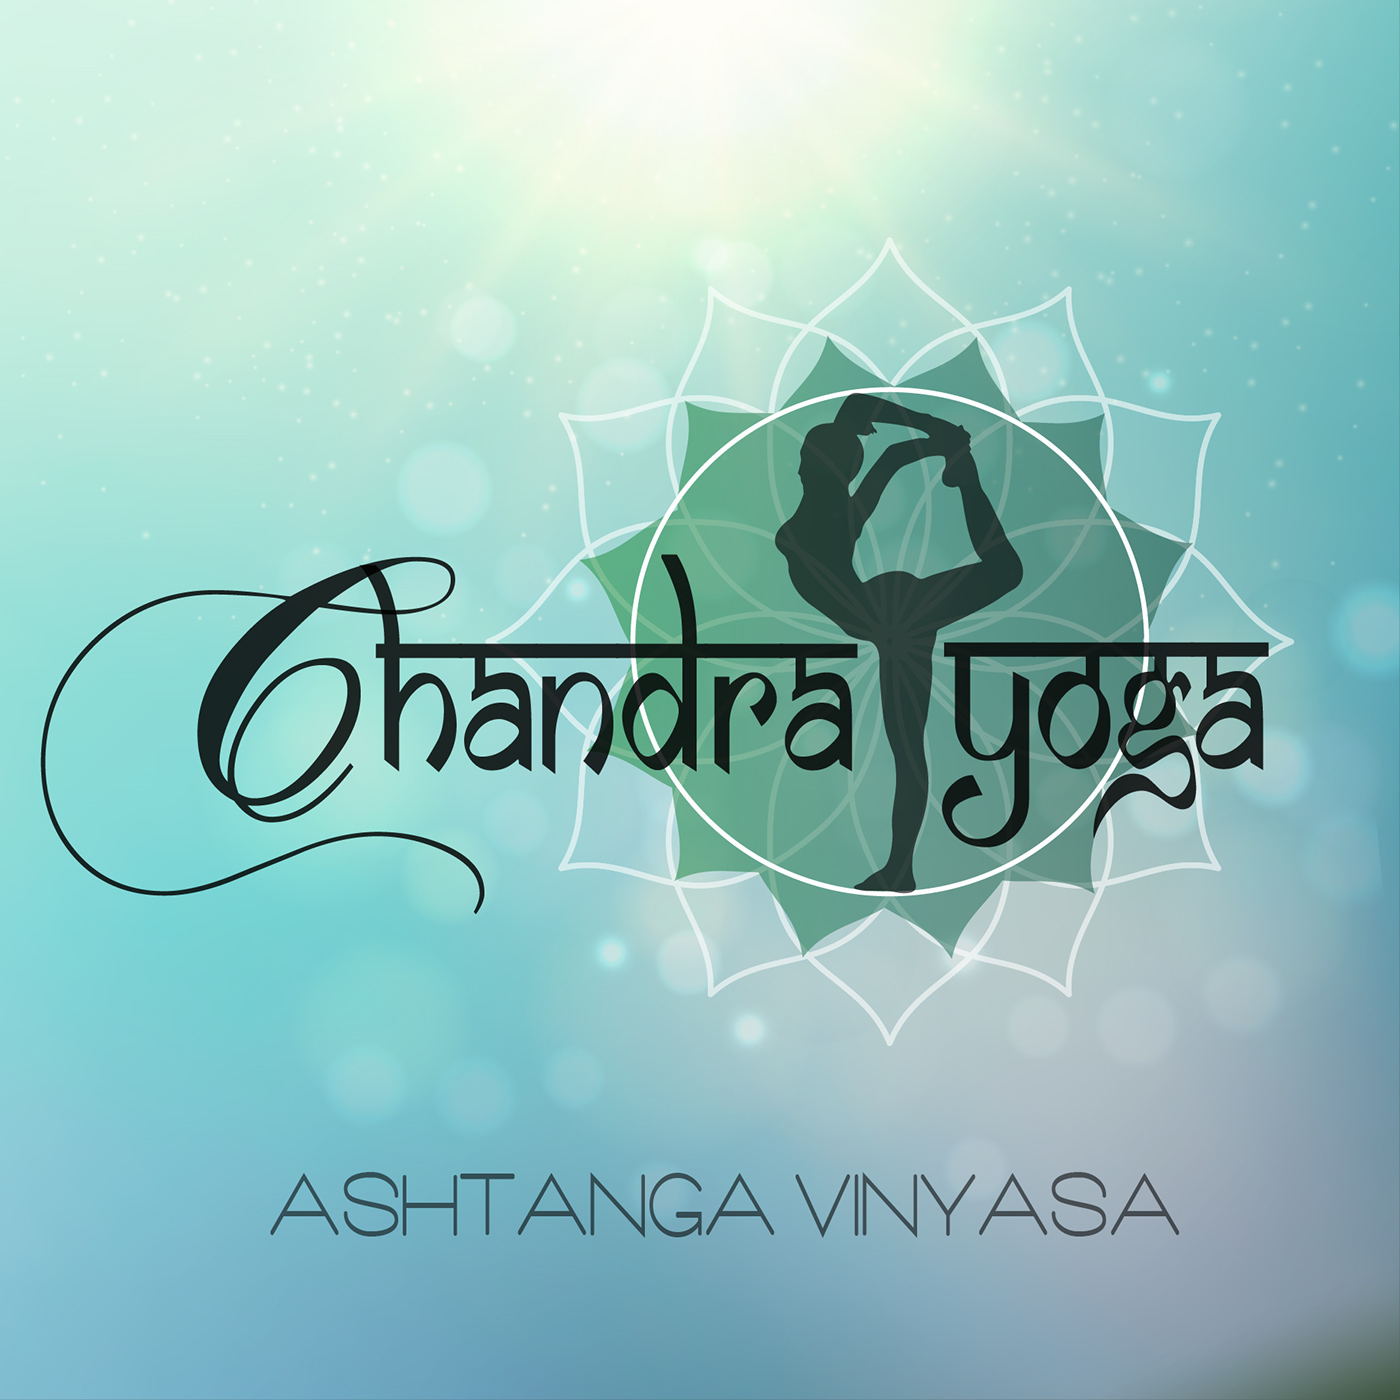 Yoga branding  graphic design  Illustrator studio chandra